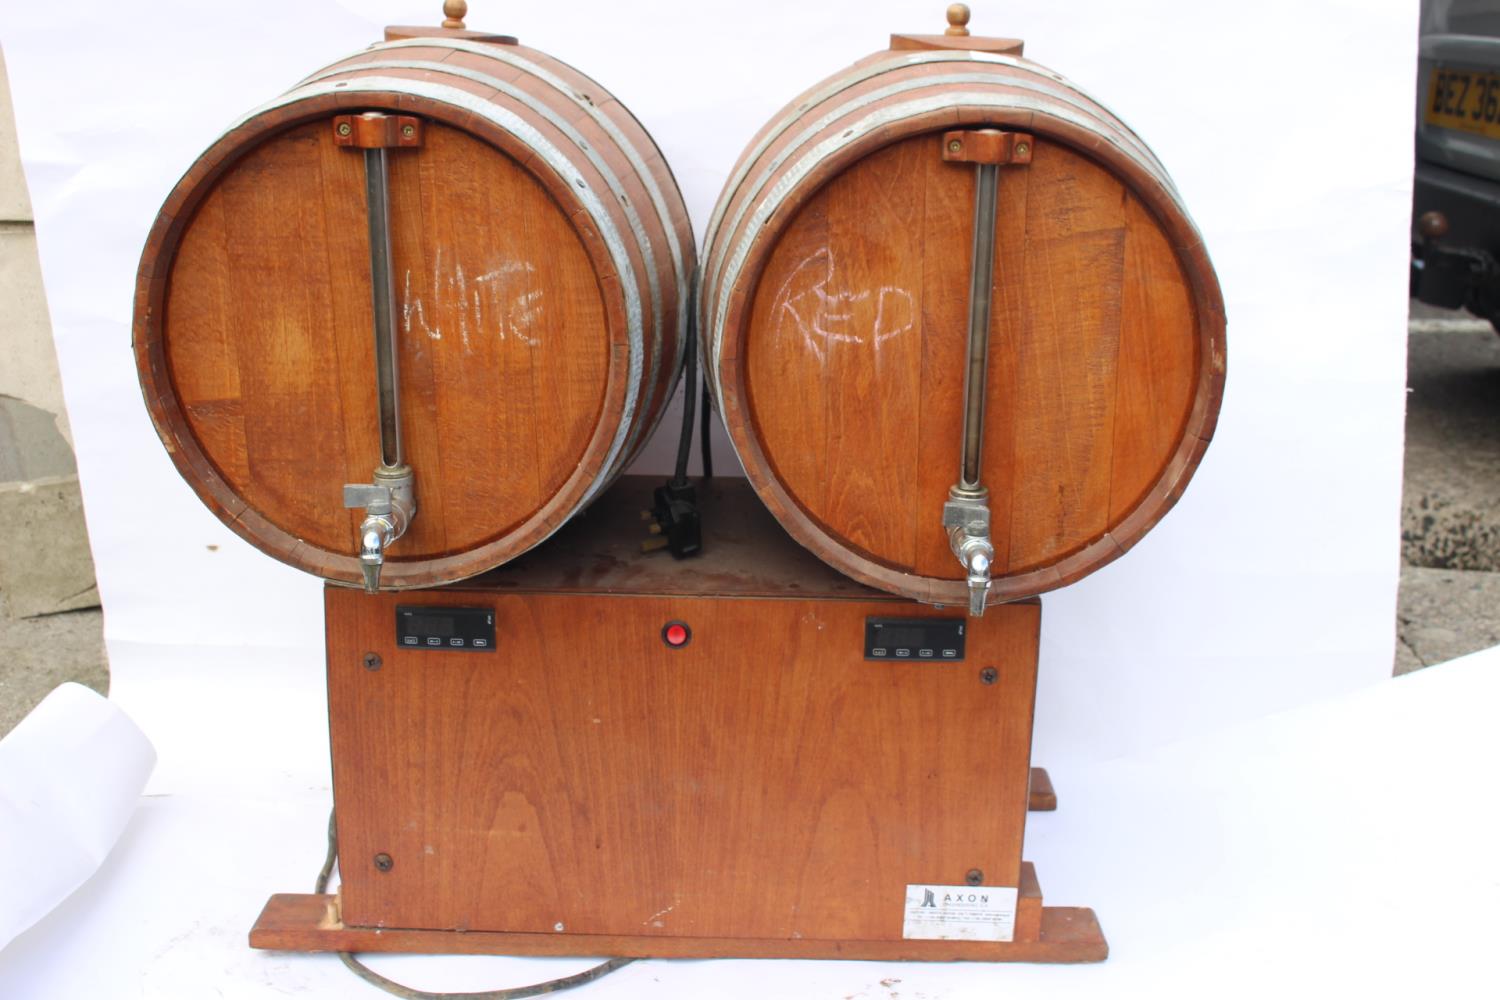 Double barrelled wooden wine dispenser.